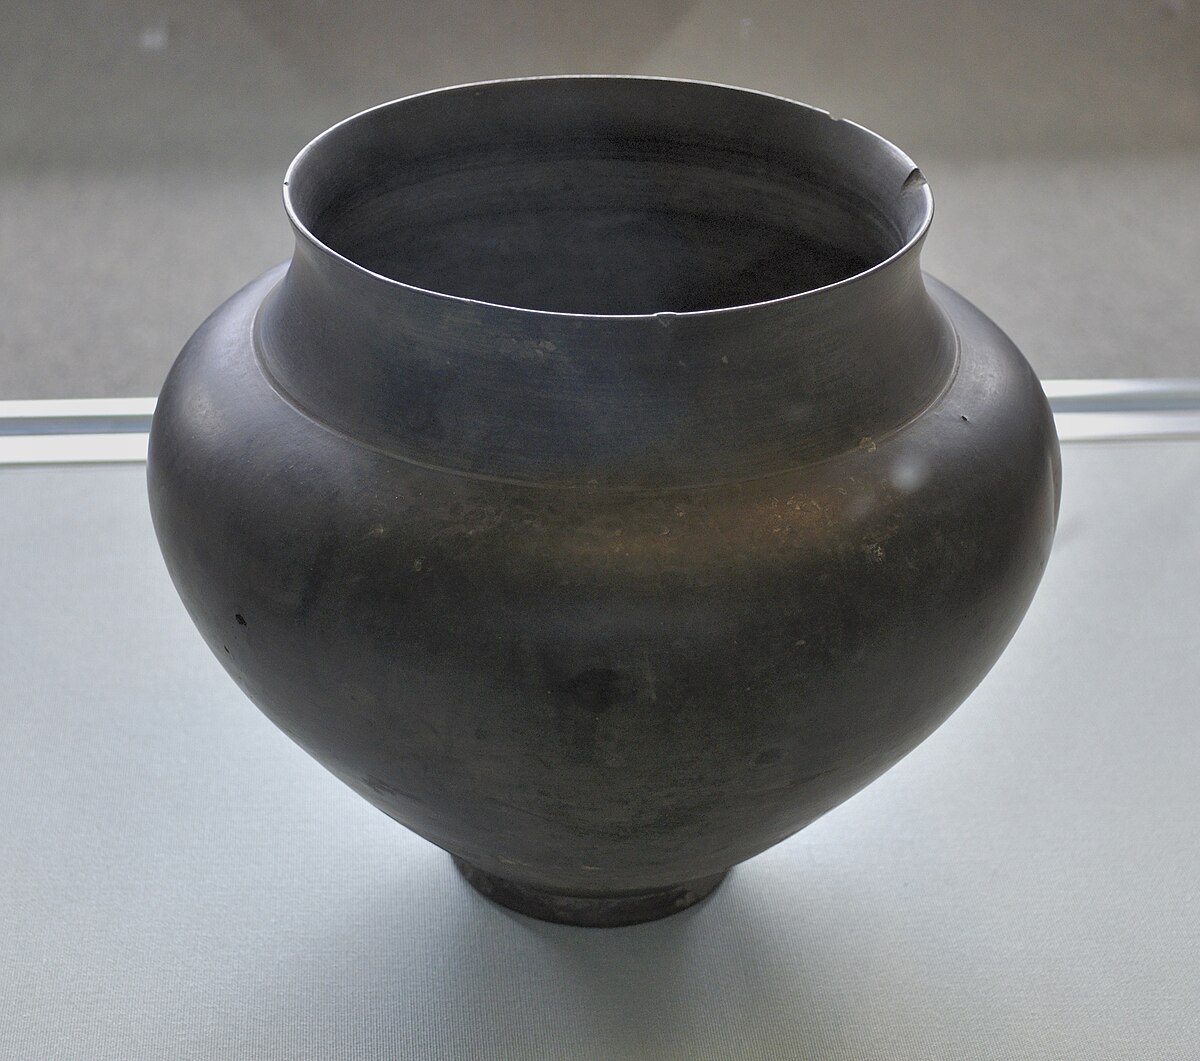 Ceramica a vernice nera - Wikipedia